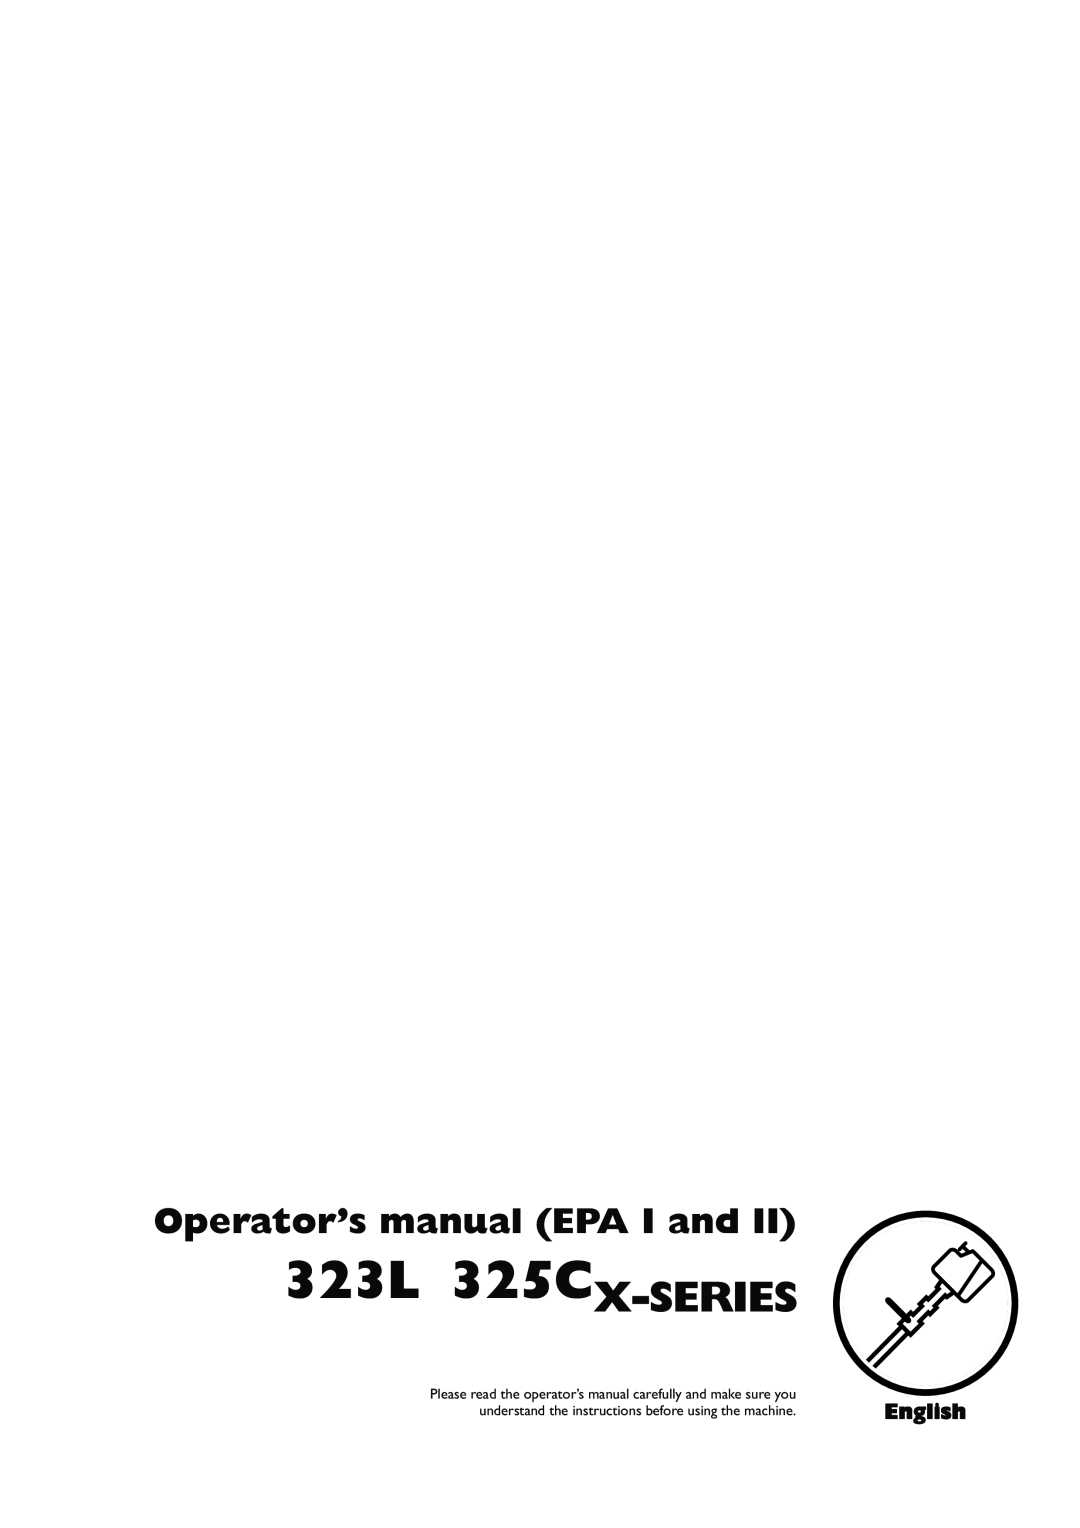 Husqvarna 966765403 manual 323L 325CX-SERIES, Operator’s manual EPA I and, English 